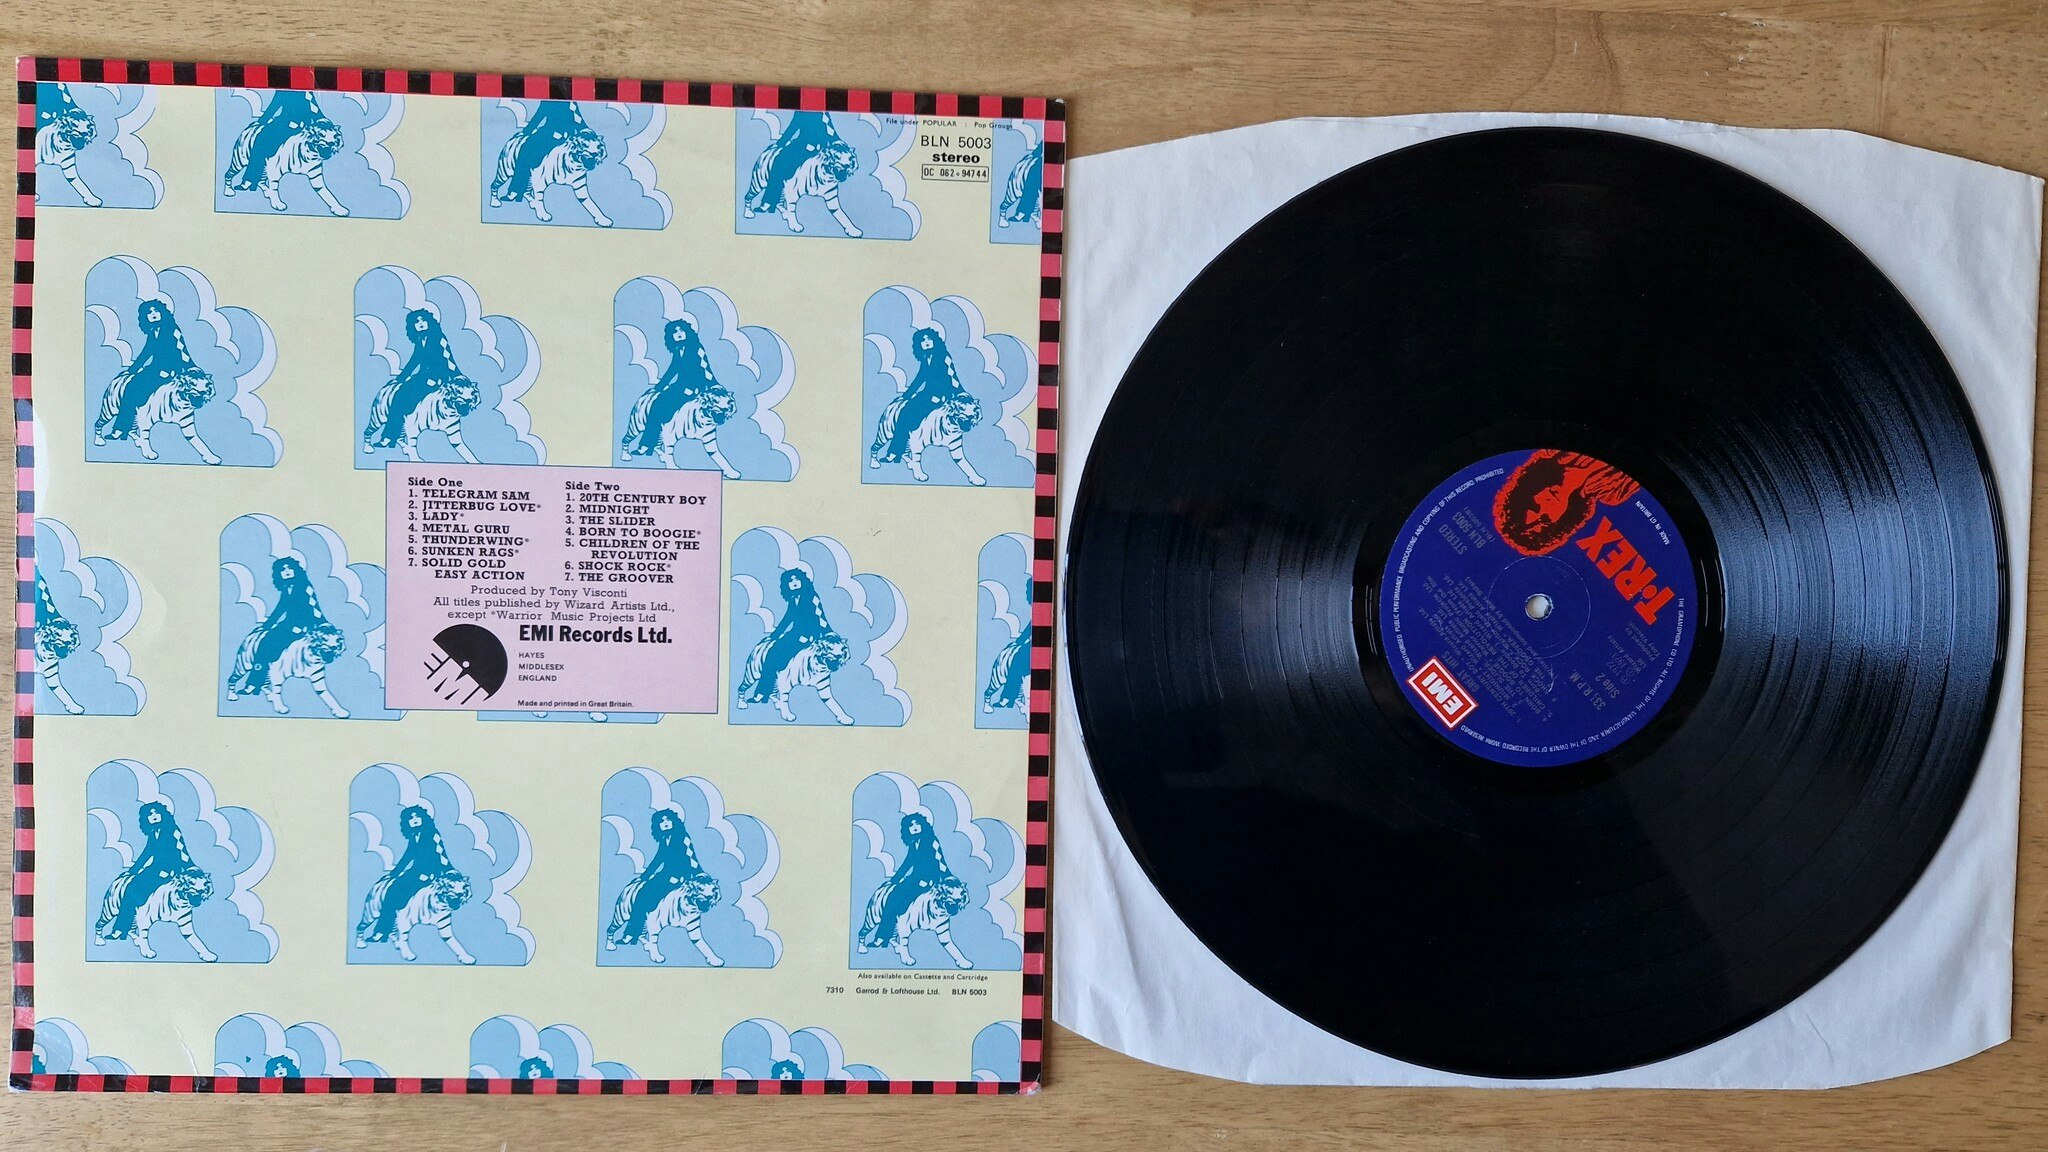 T. Rex, Great hits. Vinyl LP